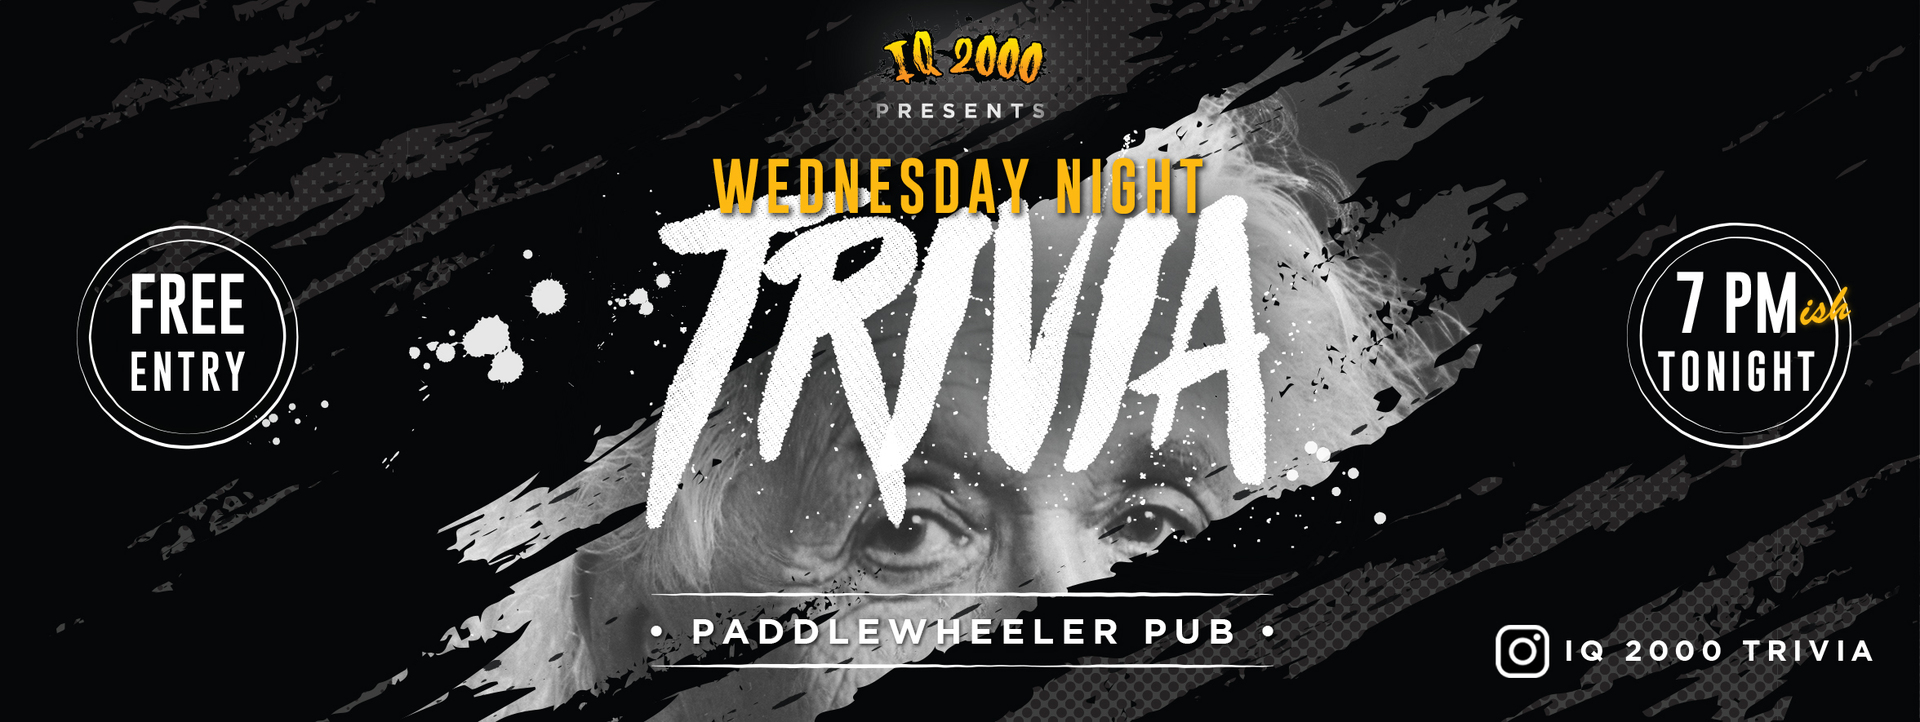 Wednesday Night Trivia At Paddlewheeler Pub, New Westminster, British Columbia, Canada